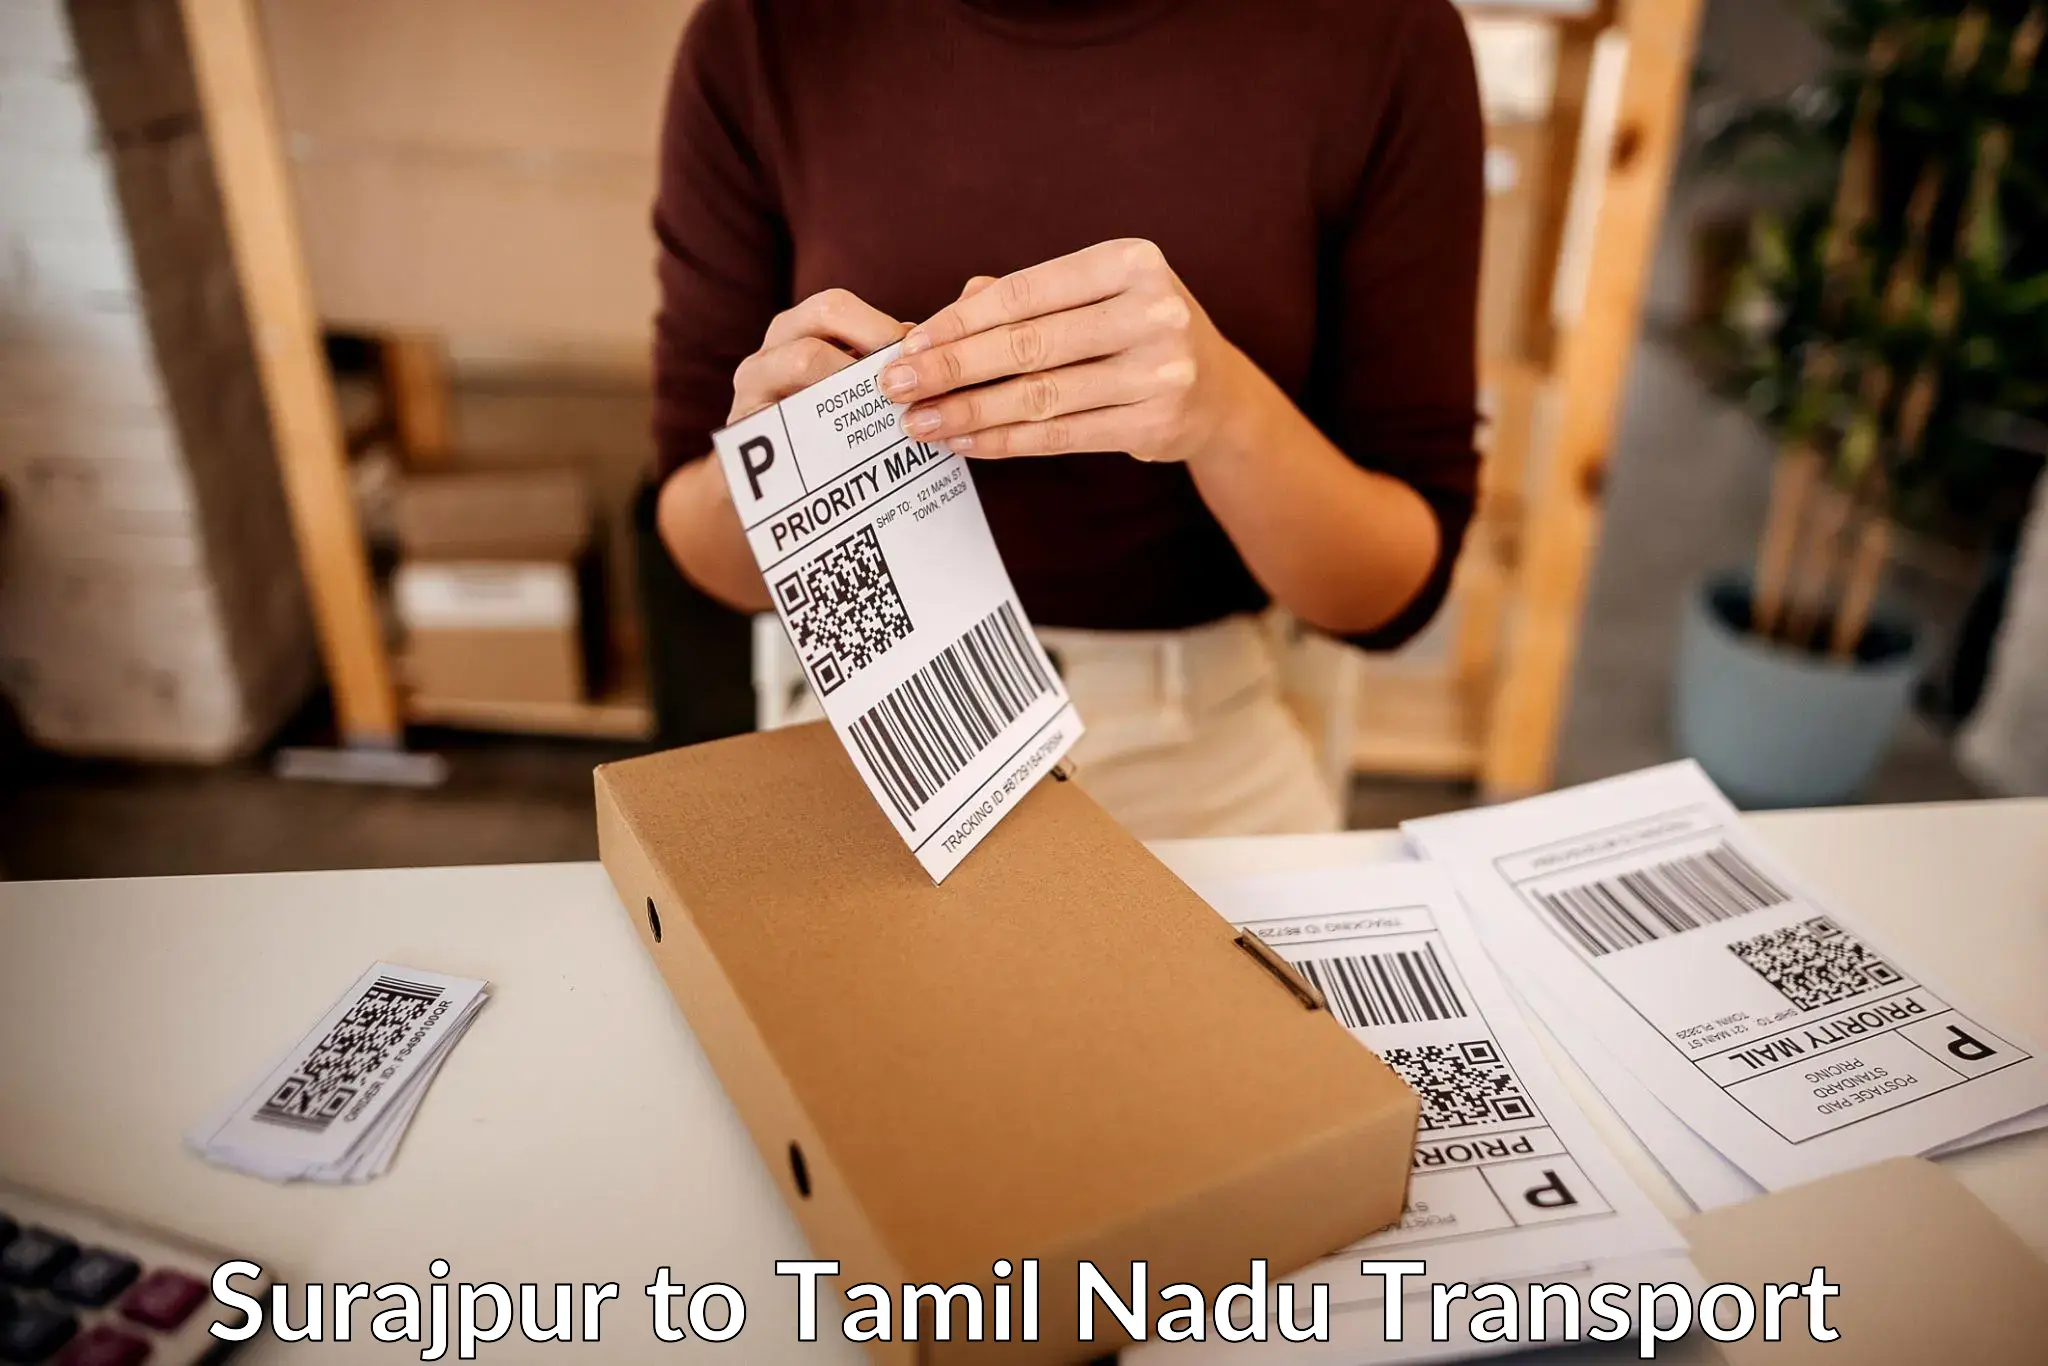 Goods delivery service Surajpur to The Gandhigram Rural Institute